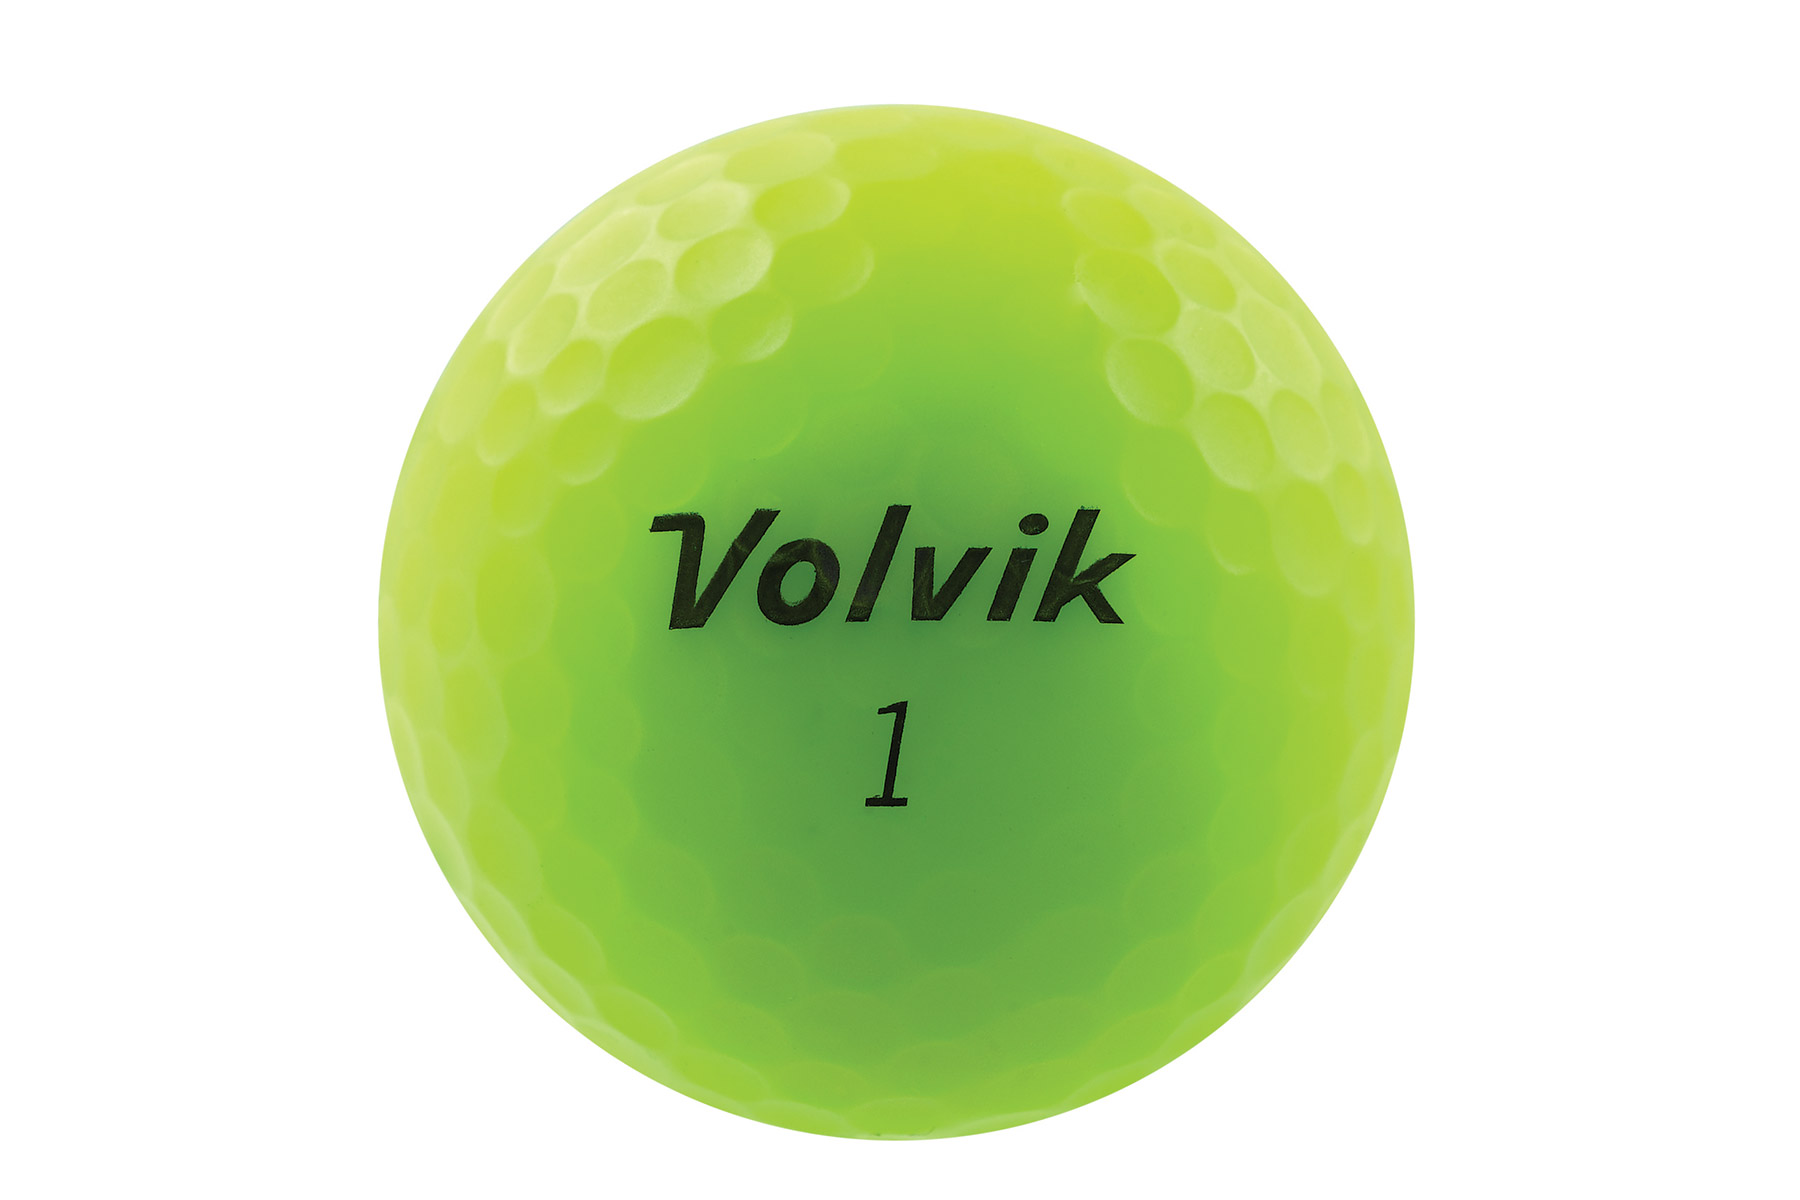 Volvik Vivid 12 Ball Pack from american golf